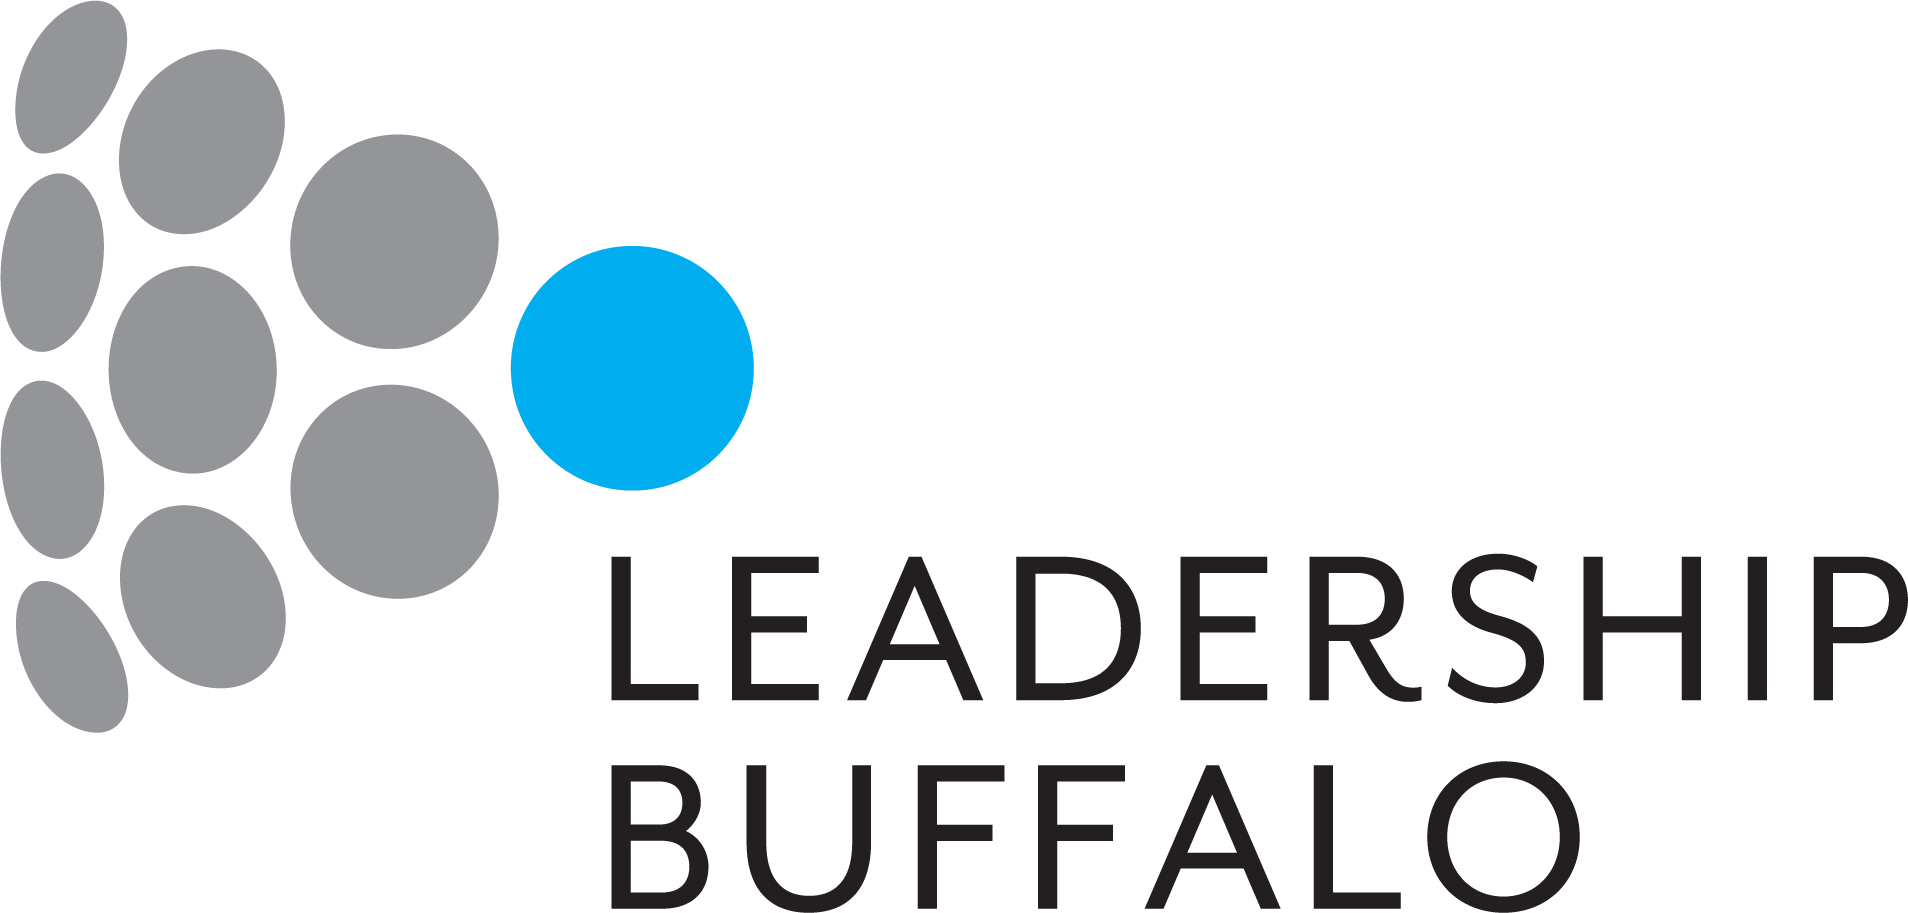 Leadership Buffalo